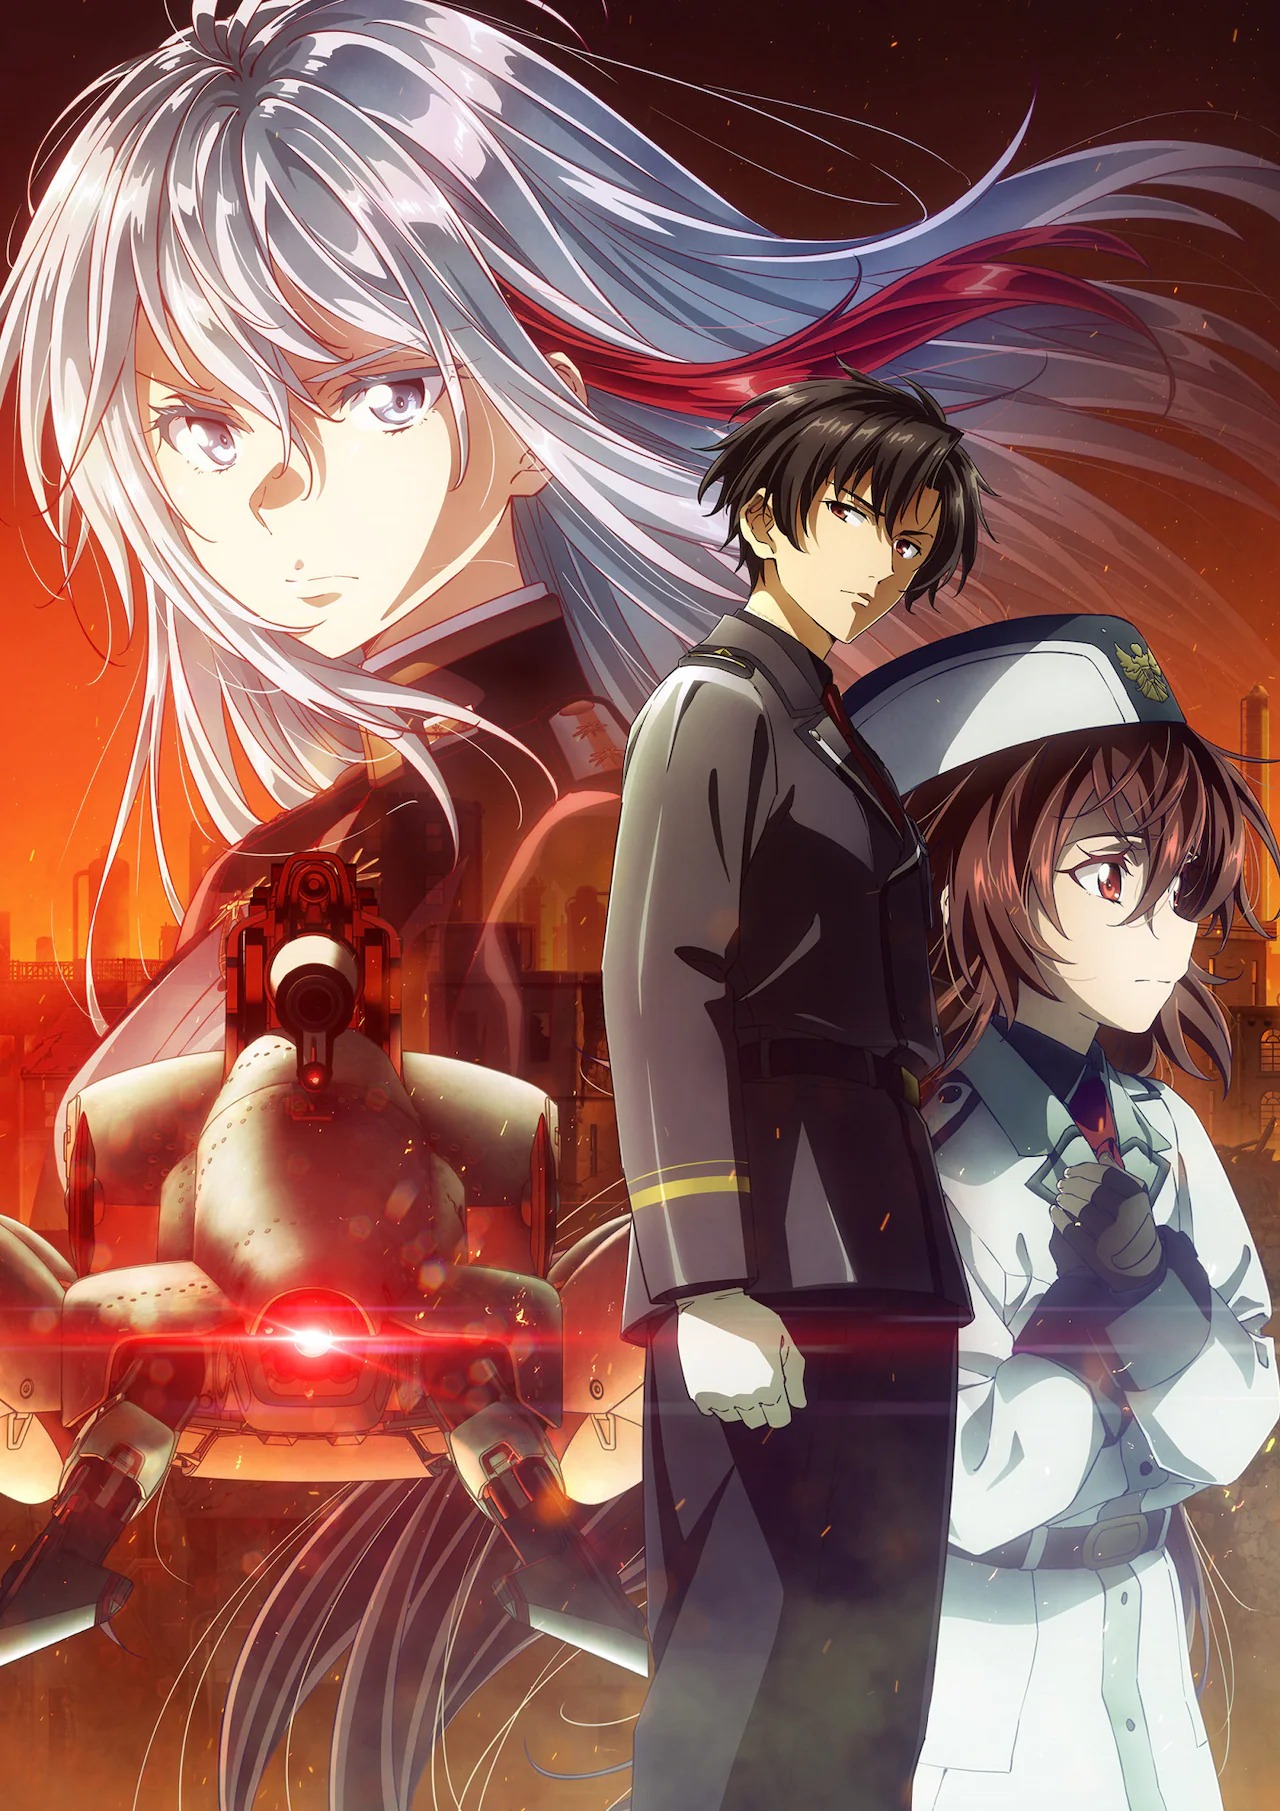 Kudasai - Se anunció que la segunda temporada del anime Shuumatsu